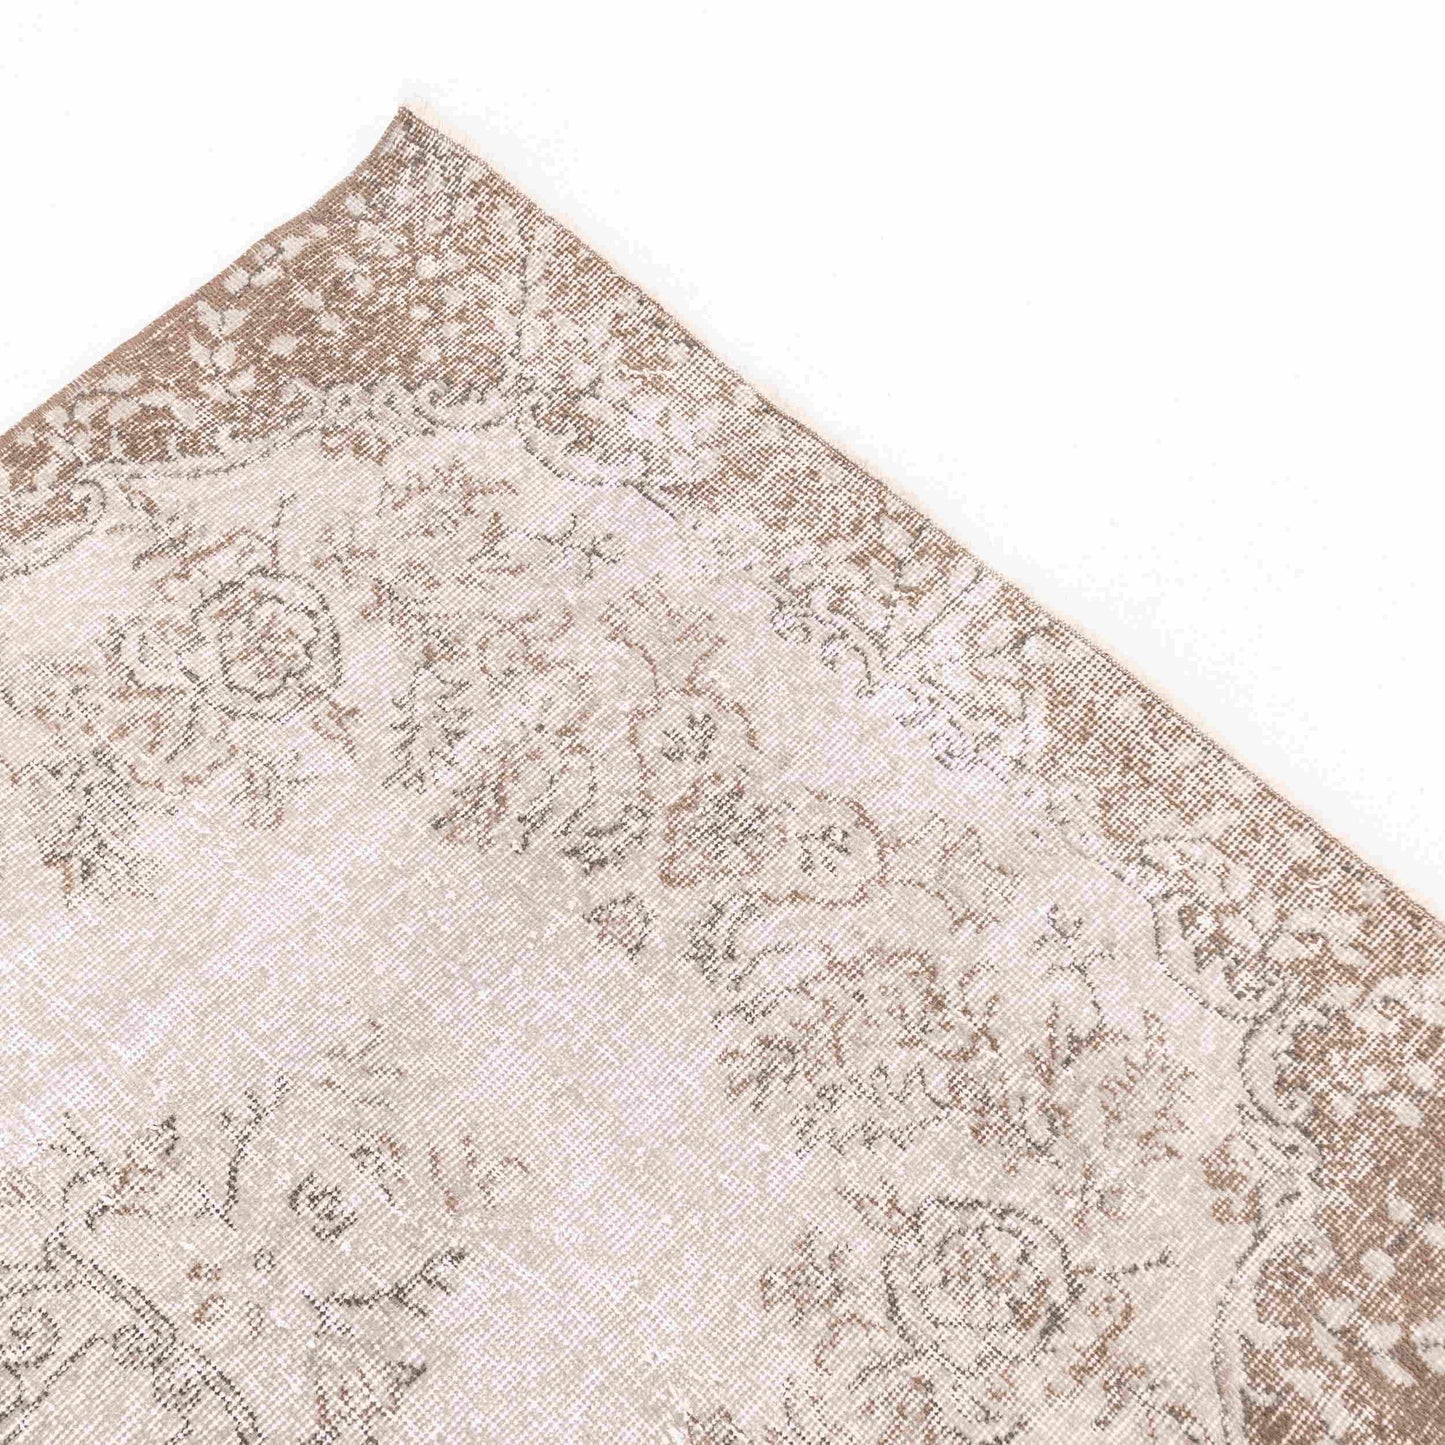 Oriental Rug Vintage Handmade Wool On Cotton 109 x 214 Cm - 3' 7'' x 7' 1'' Sand C007 ER01